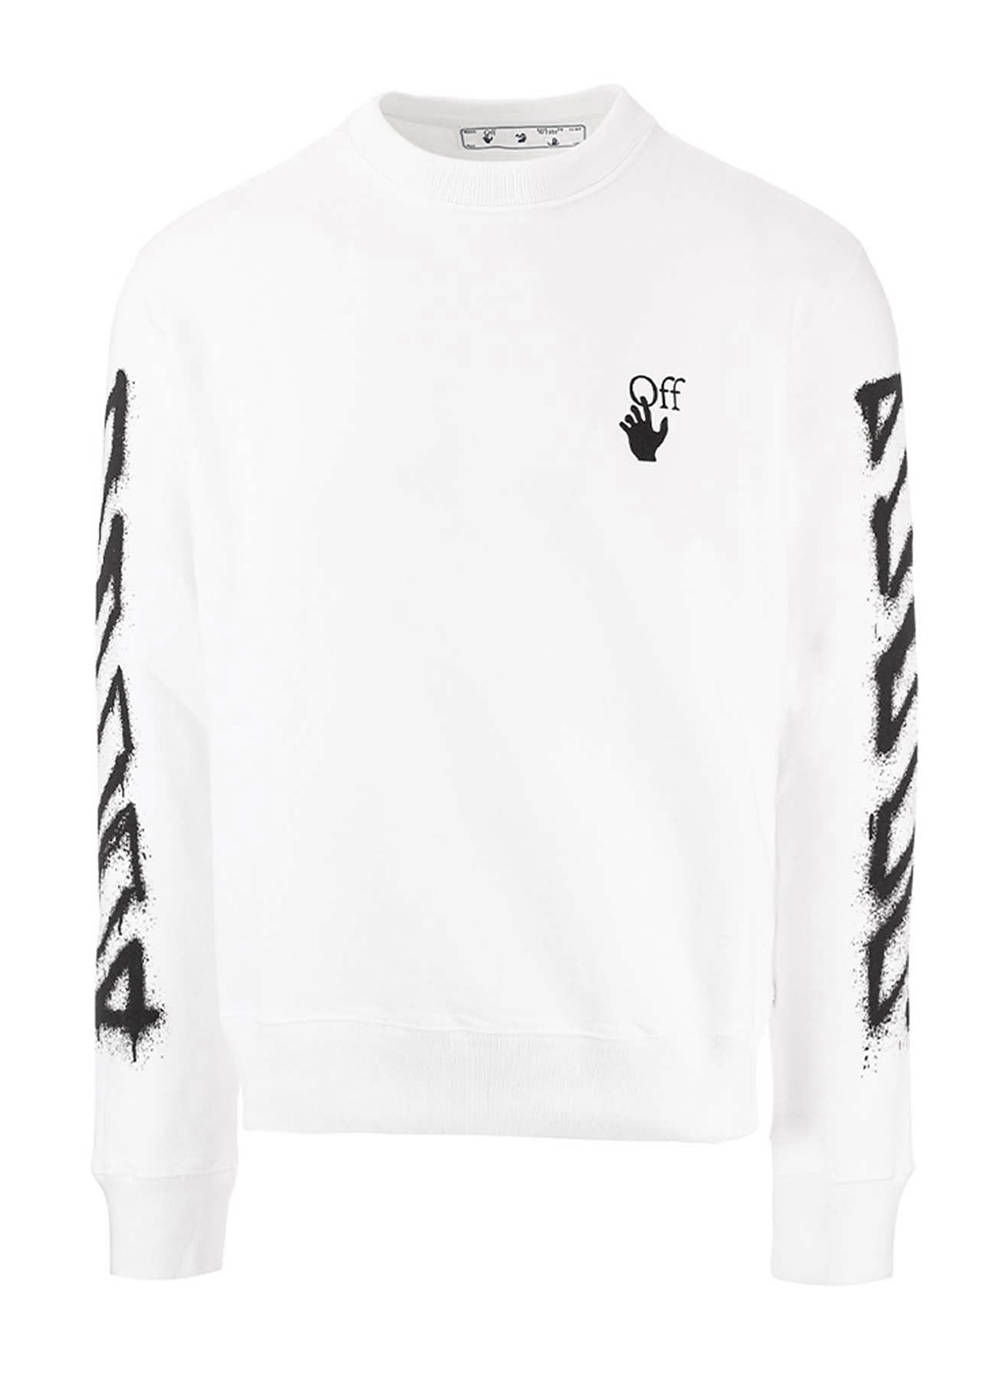 OFF-WHITE Spray Marker Arrows Sweatshirt White Black